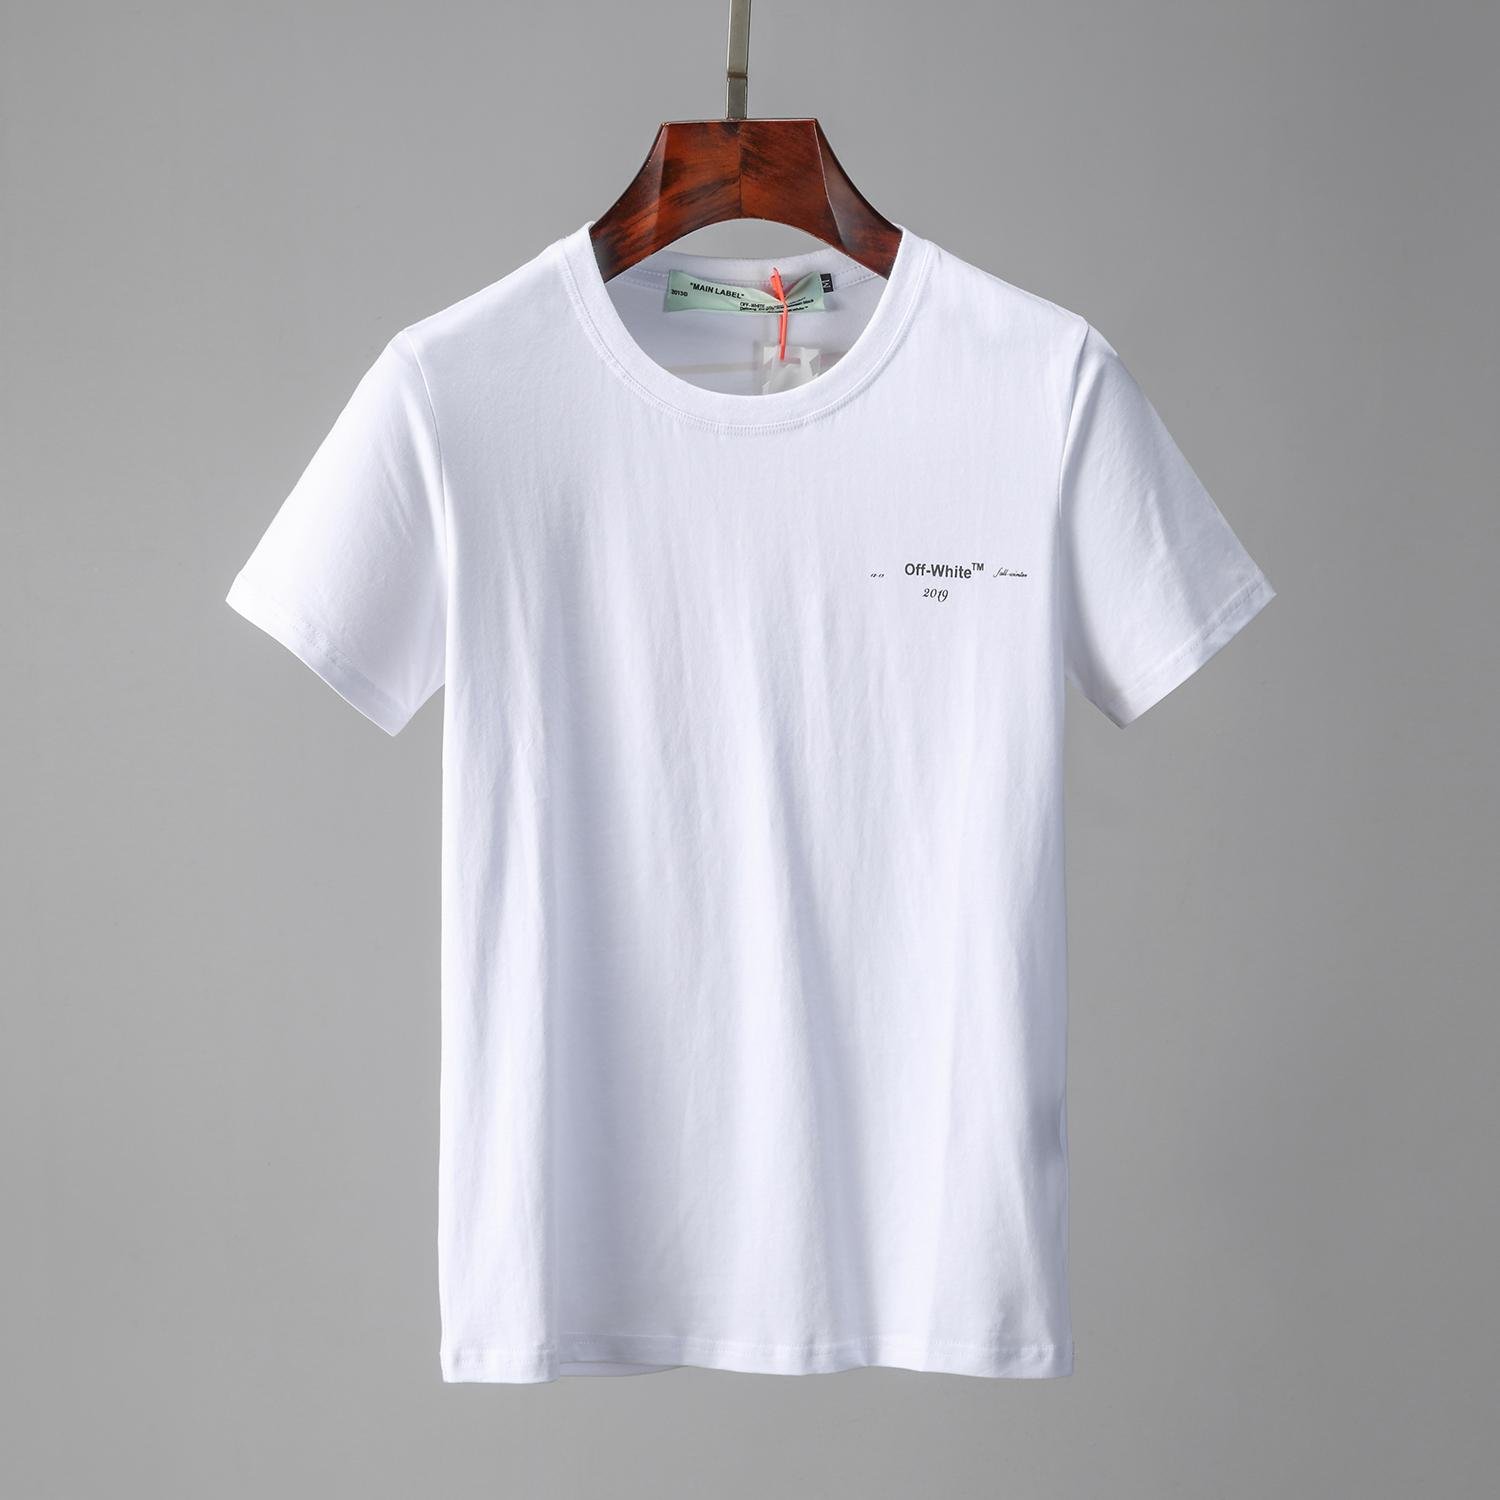 OFF-WHITE White Tape Arrow Print T-Shirt men cheap cotton tee,OG quality T-shirt 4